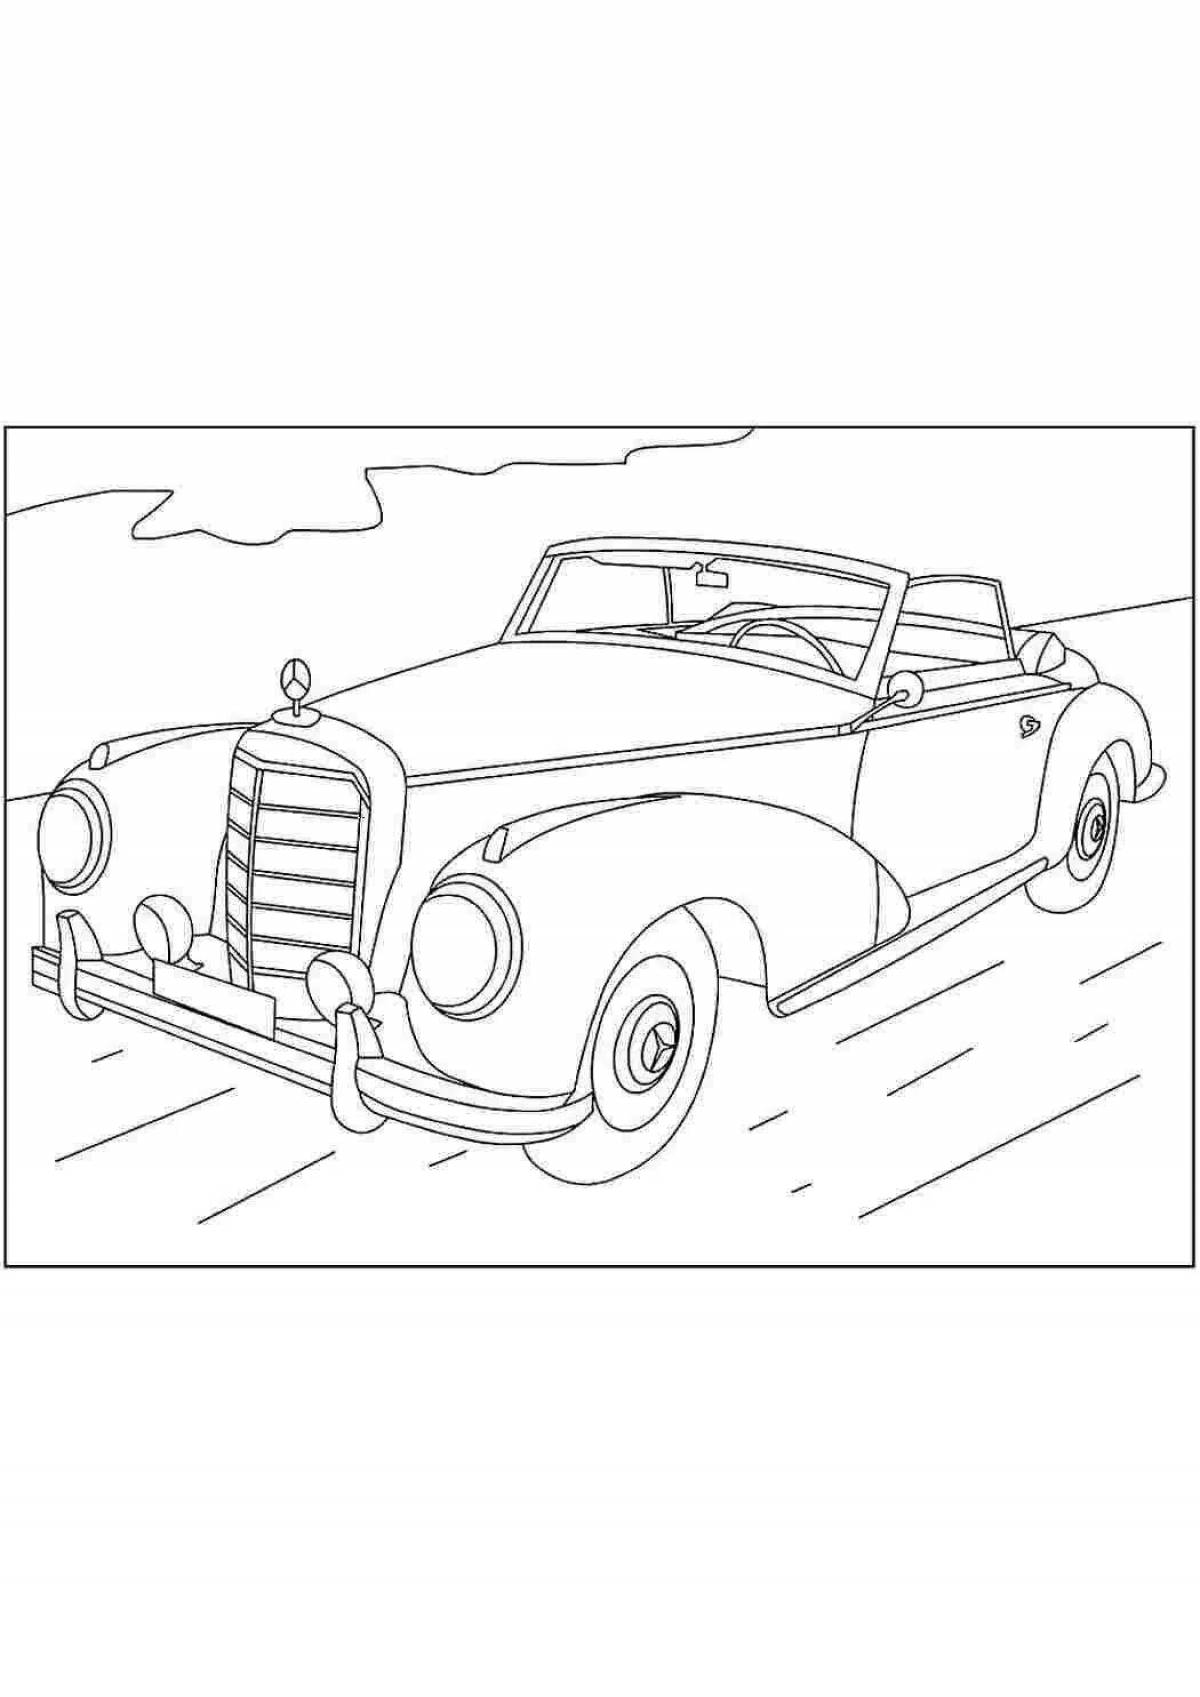 Luxury vintage cars coloring book